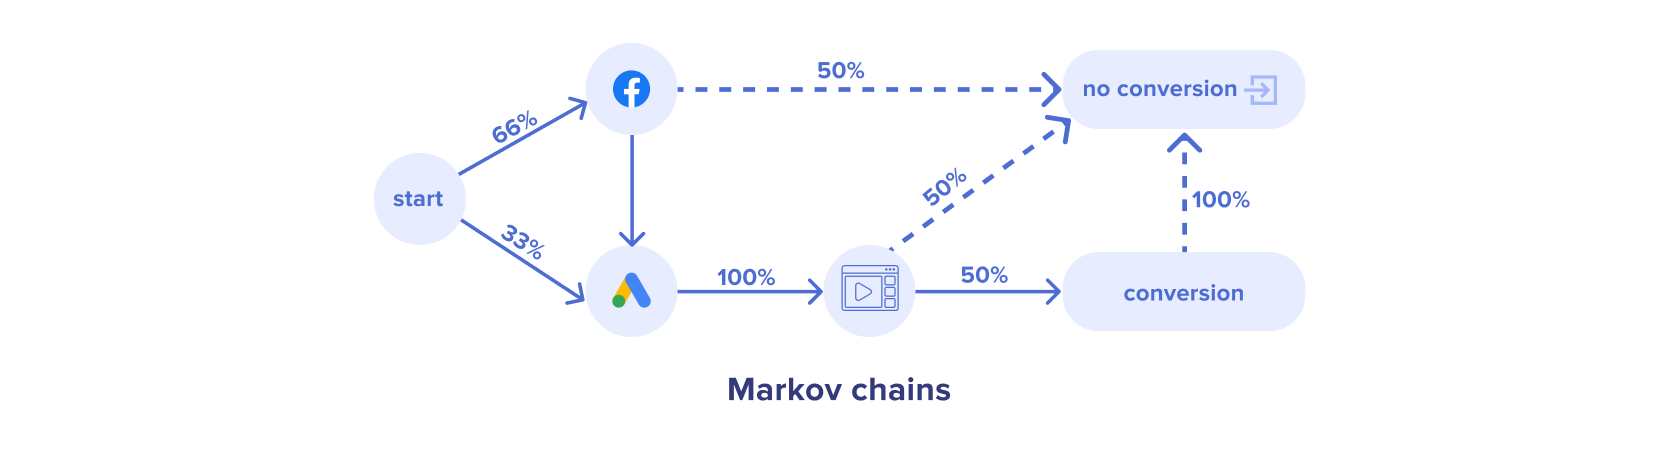 Markov Chains attribution